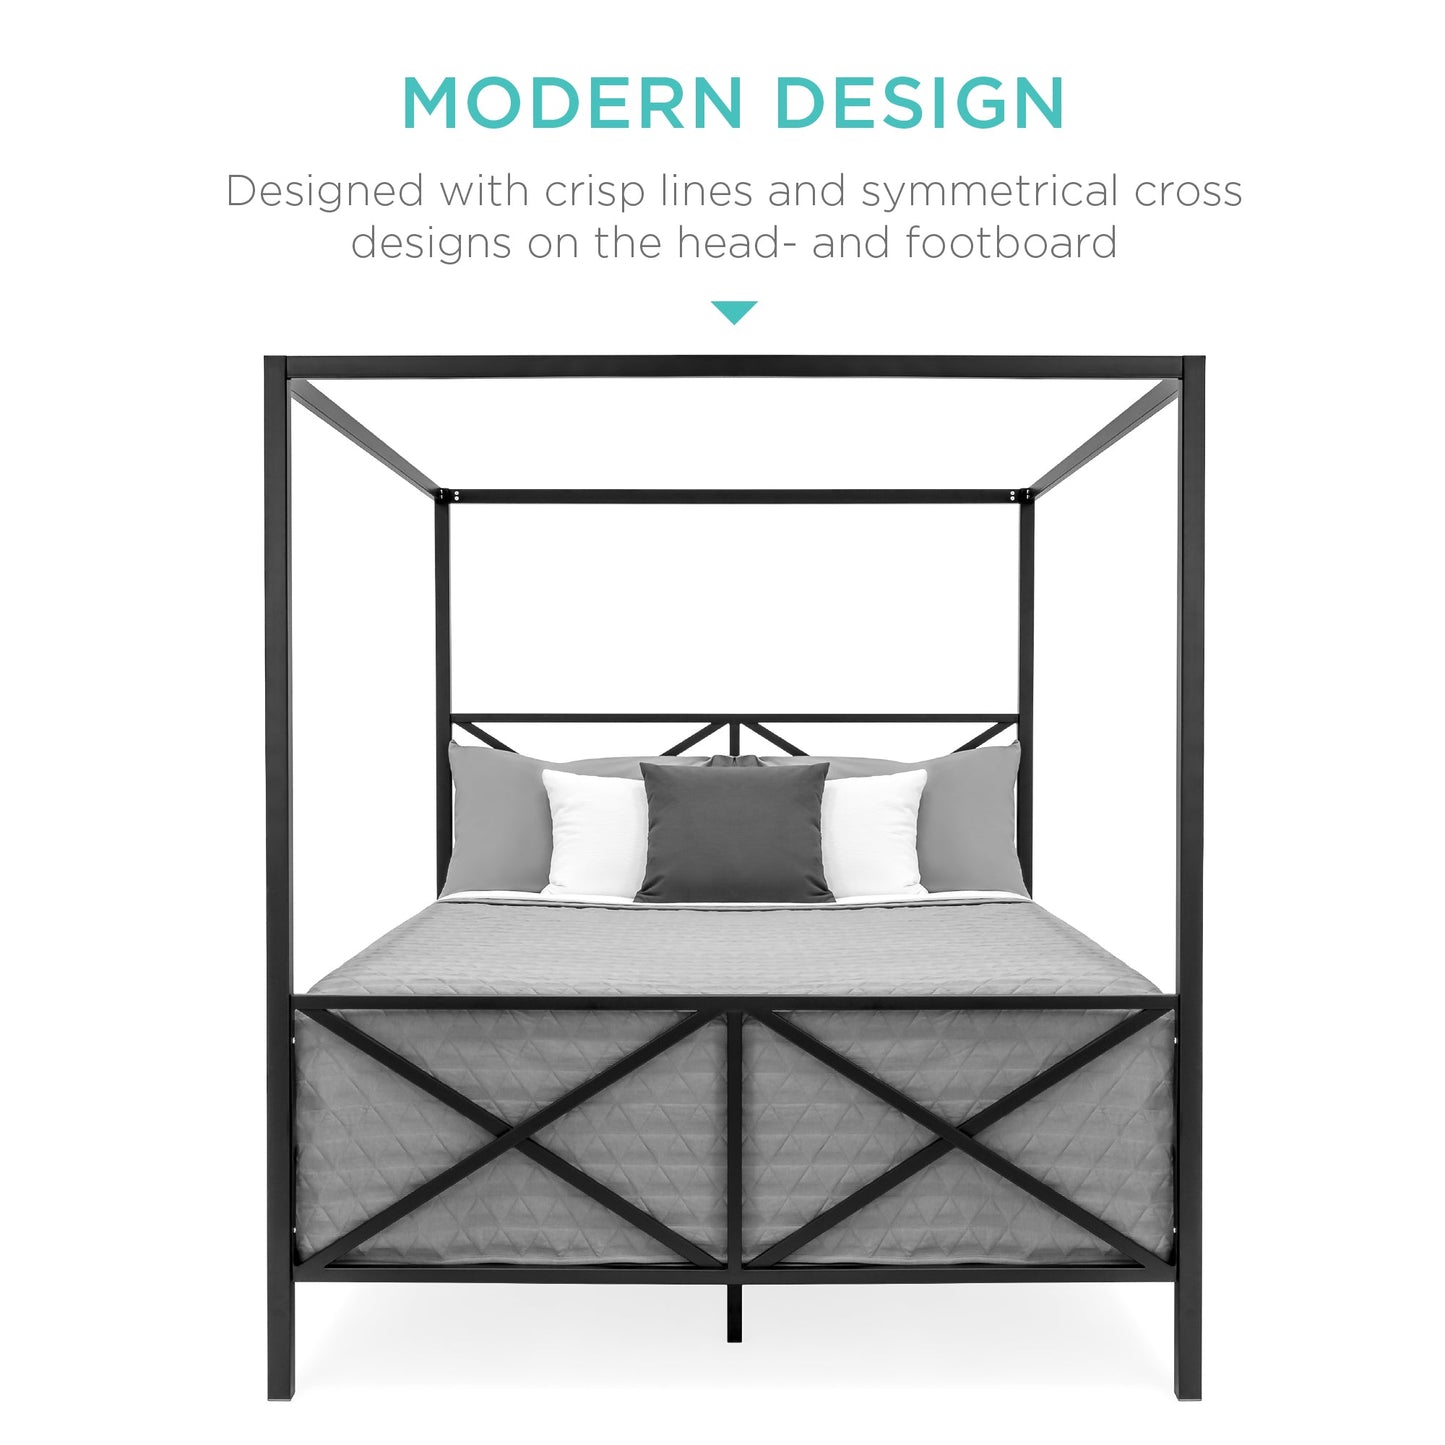 4-Post Queen Size Modern Metal Canopy Bed Frame w/ Headboard, Footboard